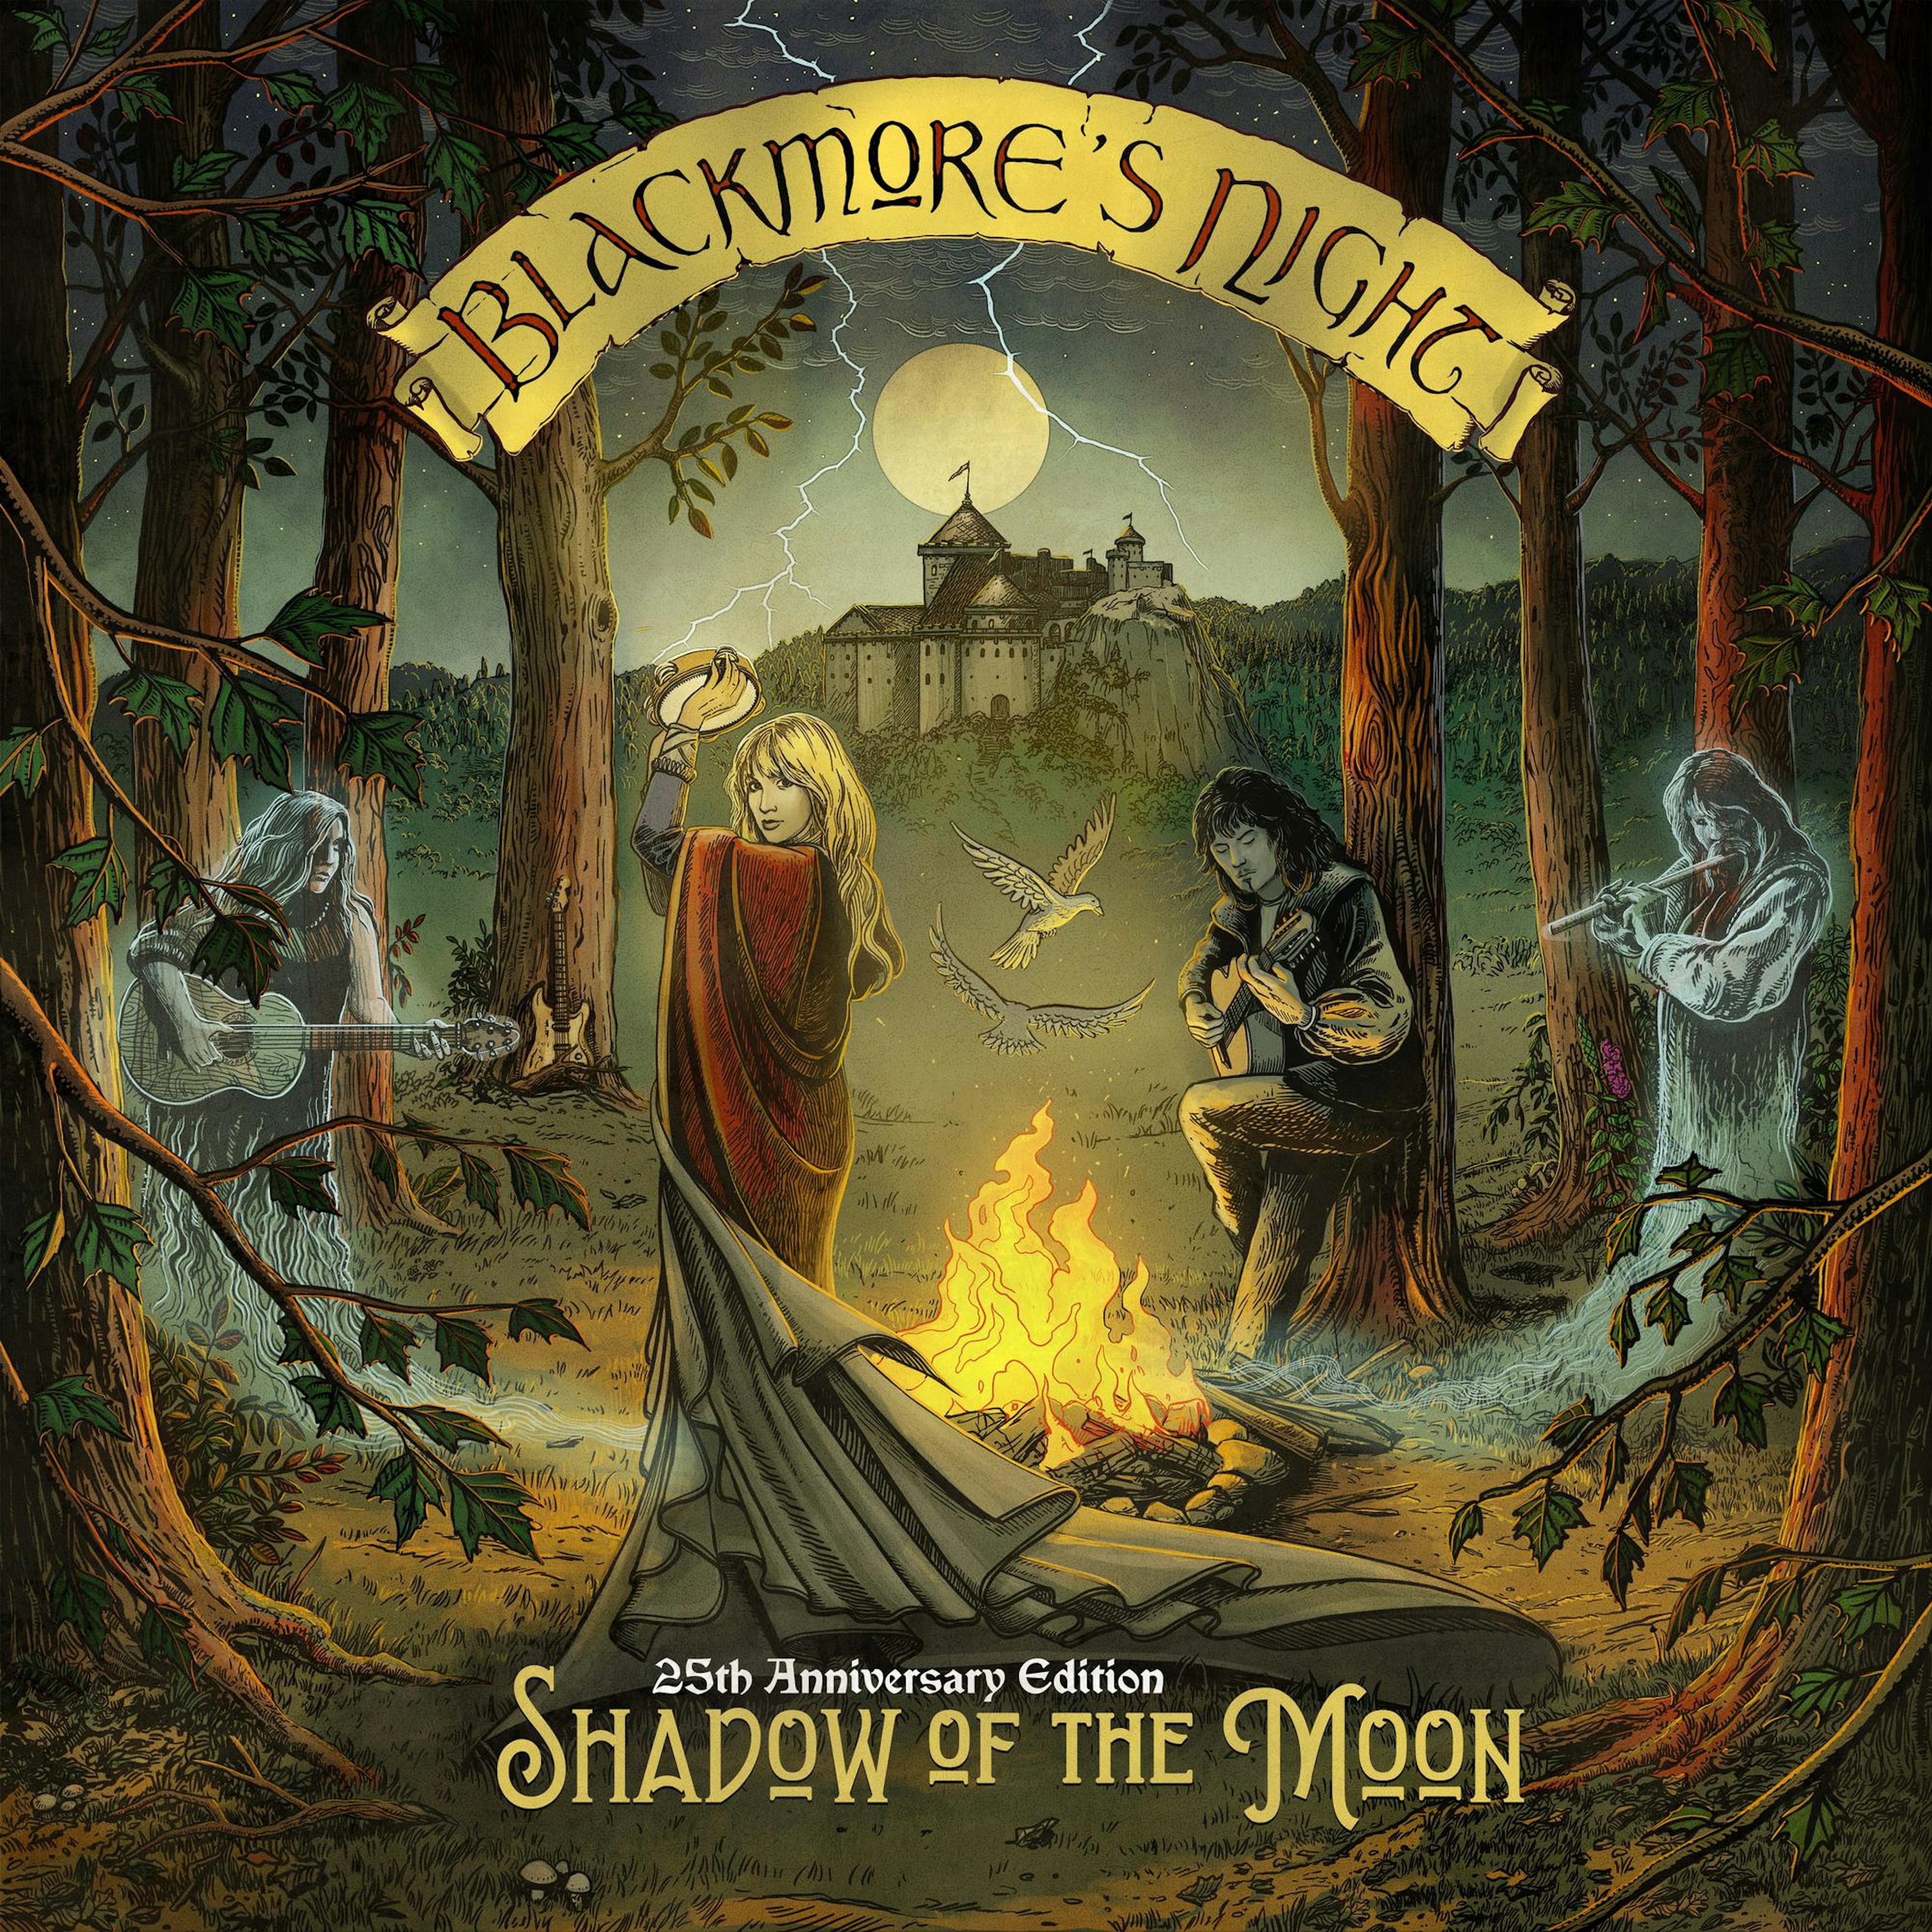 Blackmores night shadow of the moon. Blackmores Night Shadow of the Moon 25th Anniversary. Blackmore's Night Shadow of the Moon 1997. Blackmore's Night дискография. Blackmore's Night обложки альбомов.